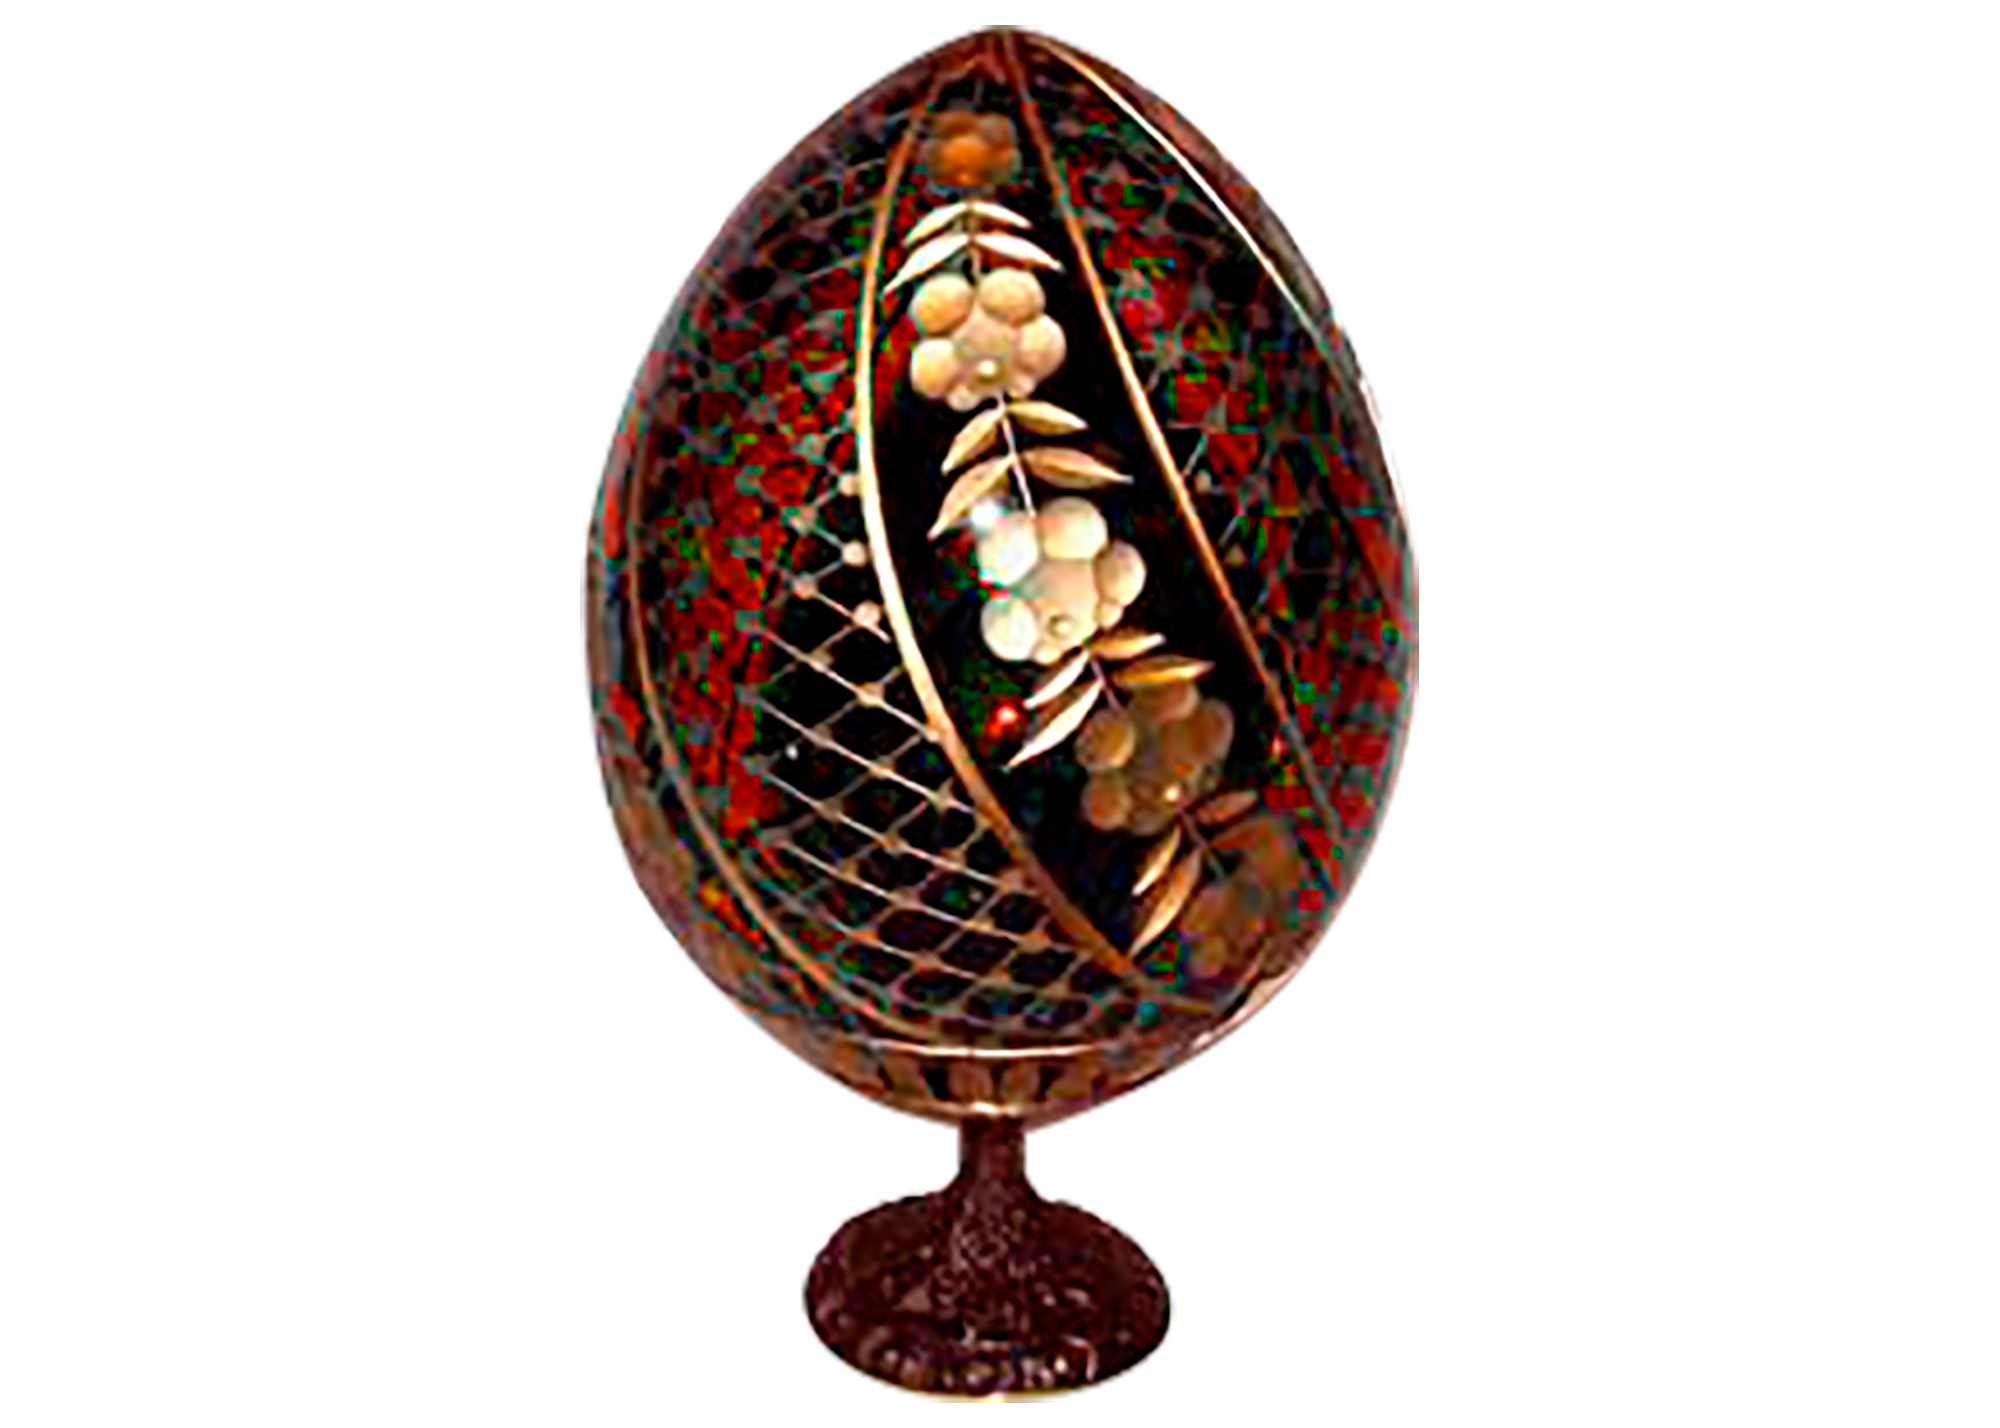 Buy Swirl w/ Flowers RED Faberge Style Egg at GoldenCockerel.com